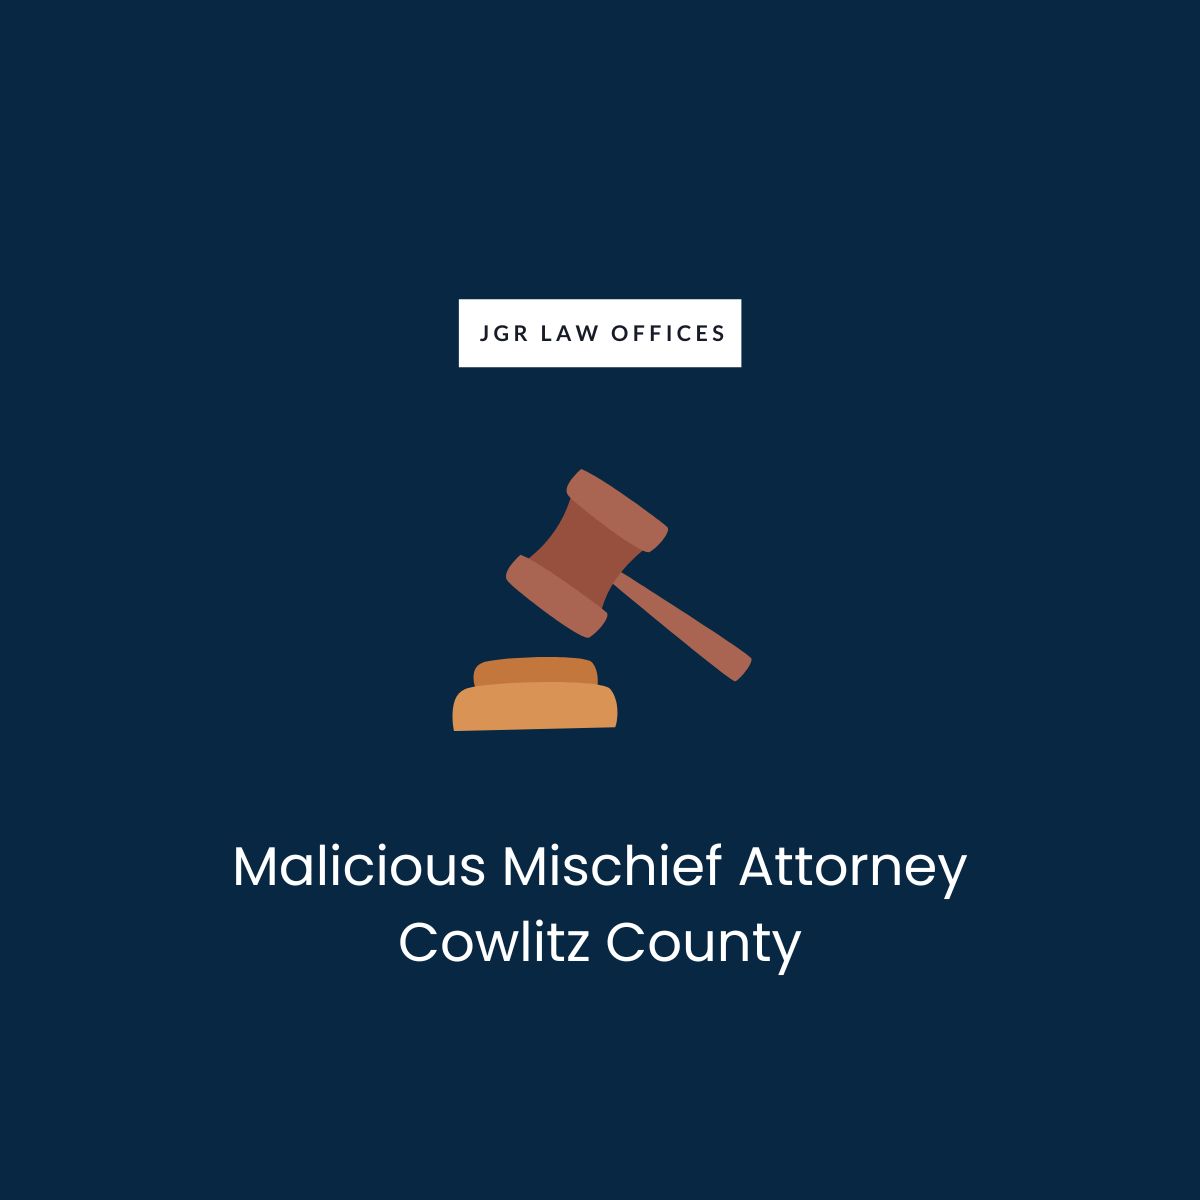 Malicious Mischief Attorney Cowlitz County